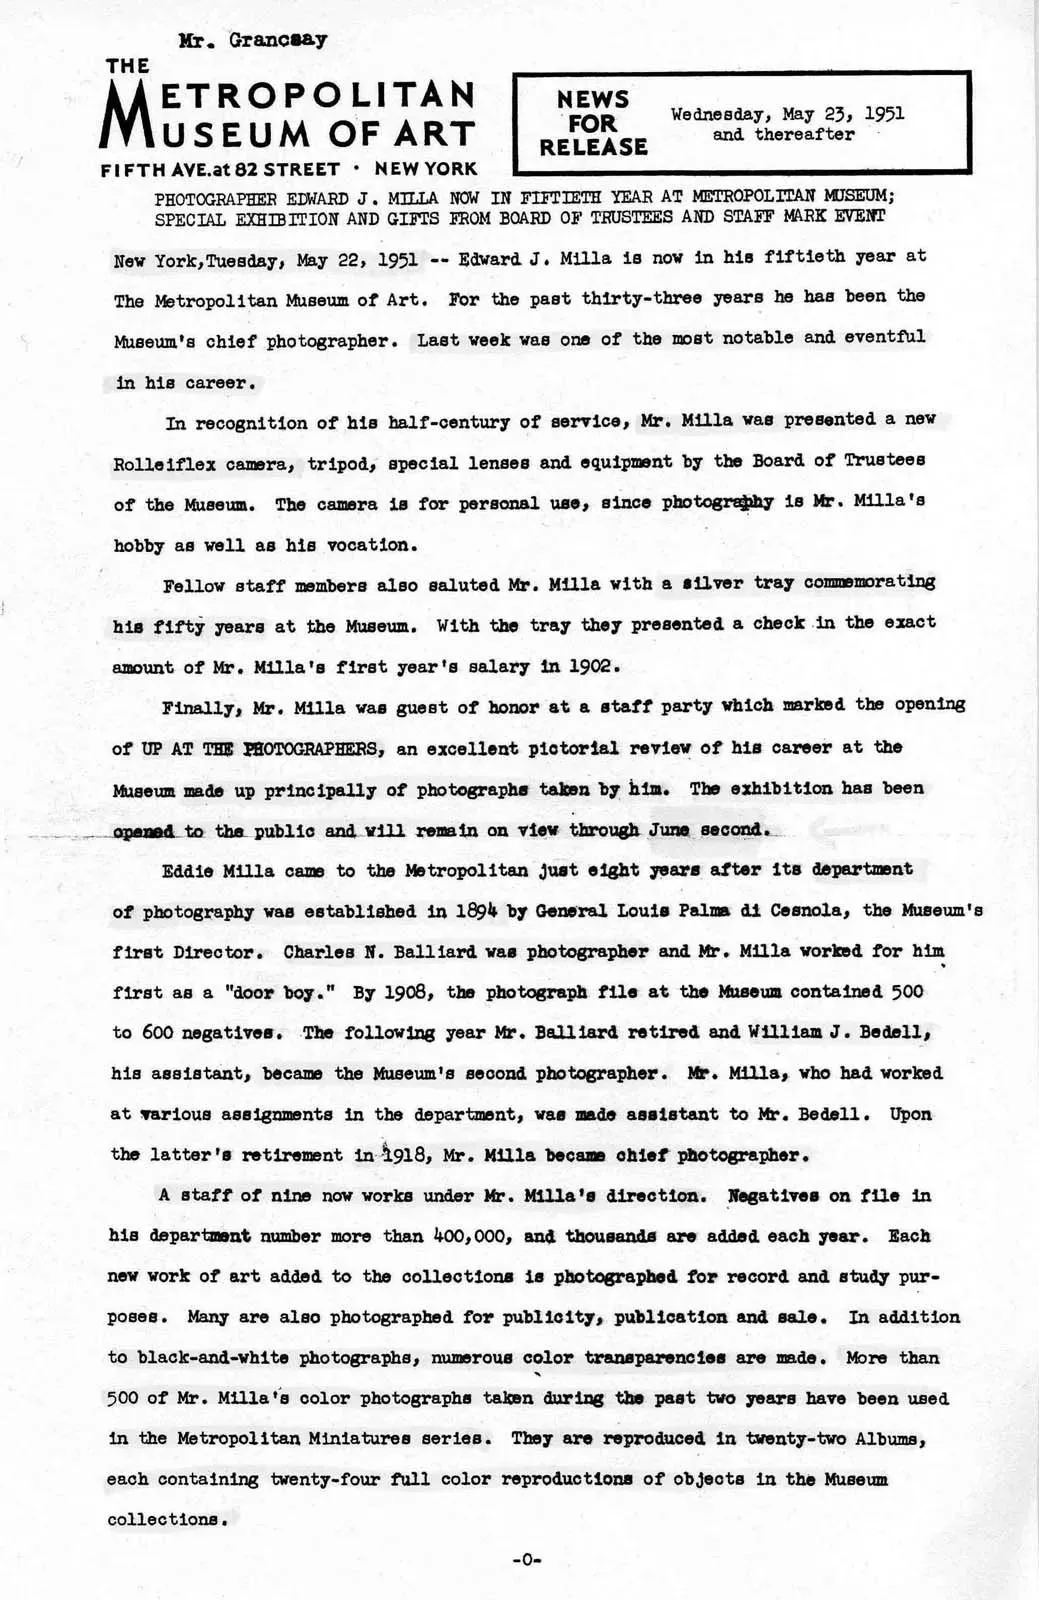 Figure 14 - Press release sent out by Metropolitan Museum of Art regarding Milla’s 1951 exhibition.